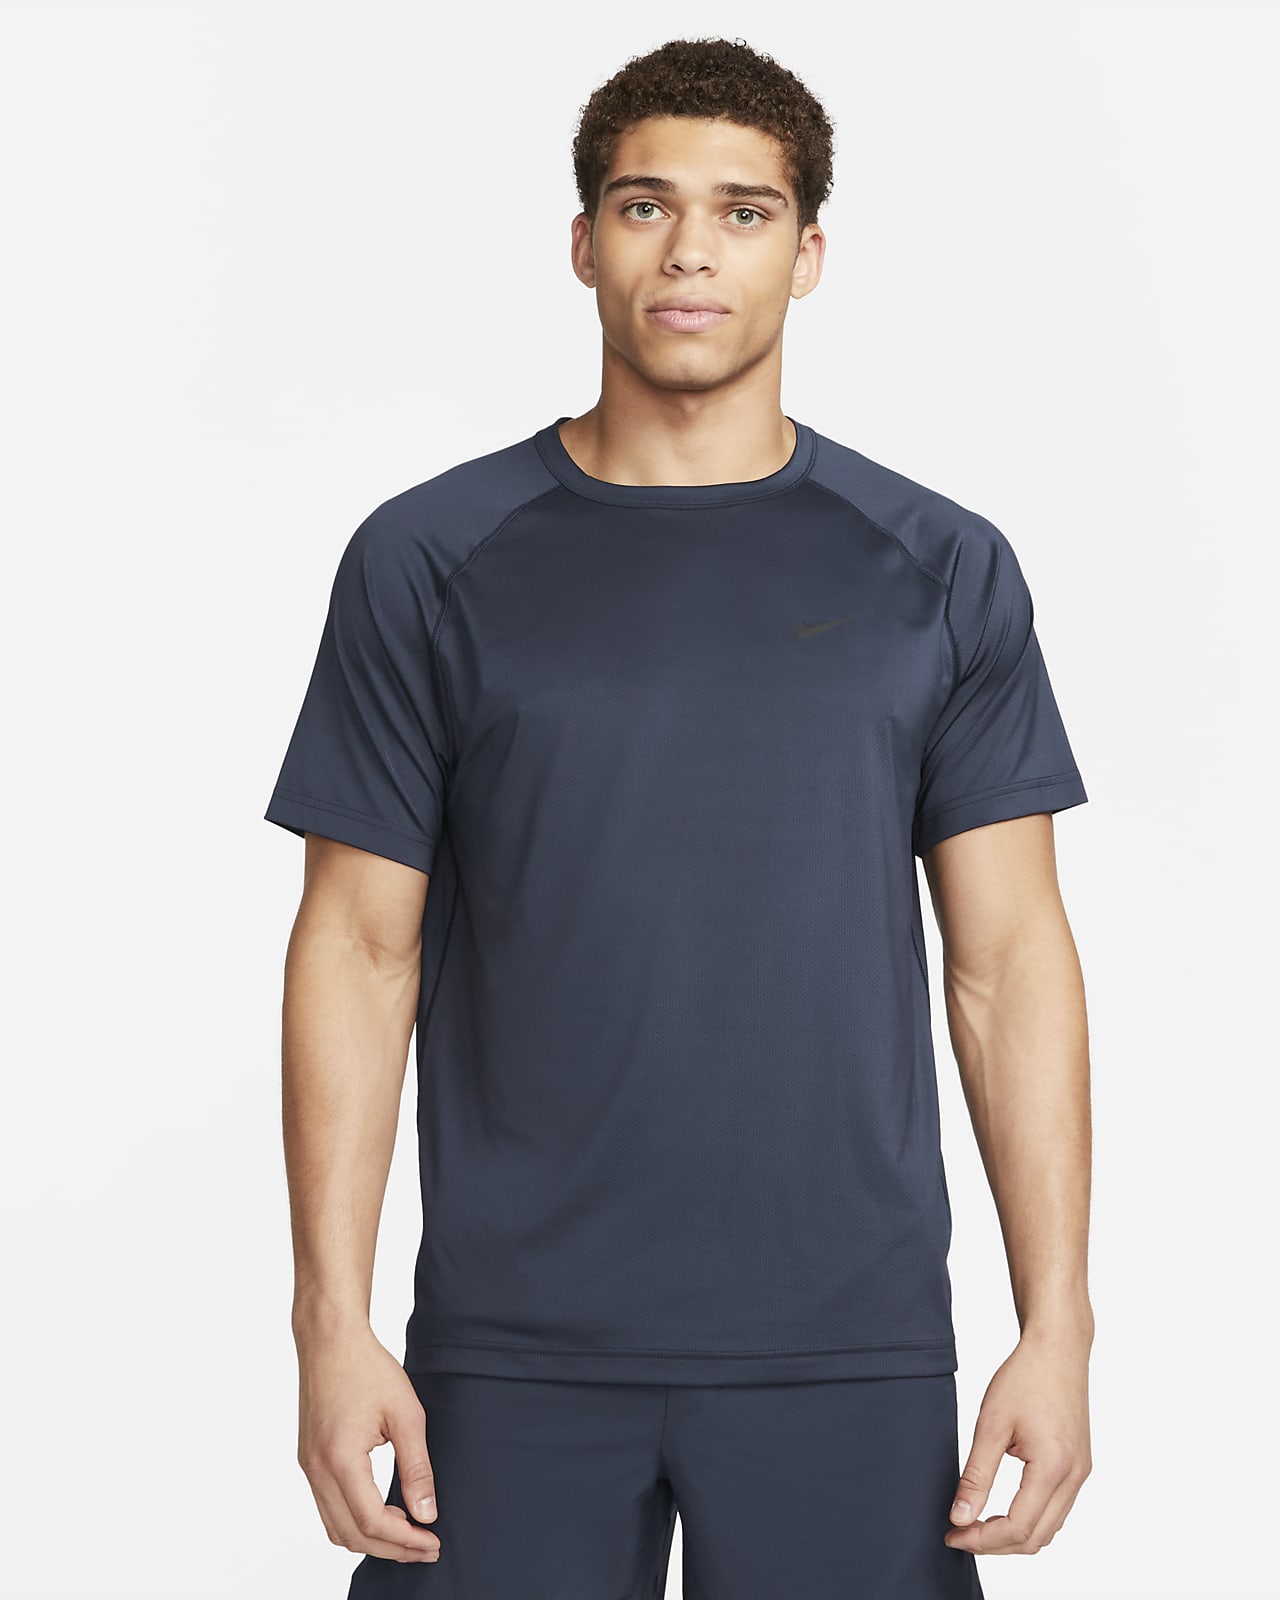 Nike Ready Dri-FIT Kısa Kollu Erkek Fitness Üstü